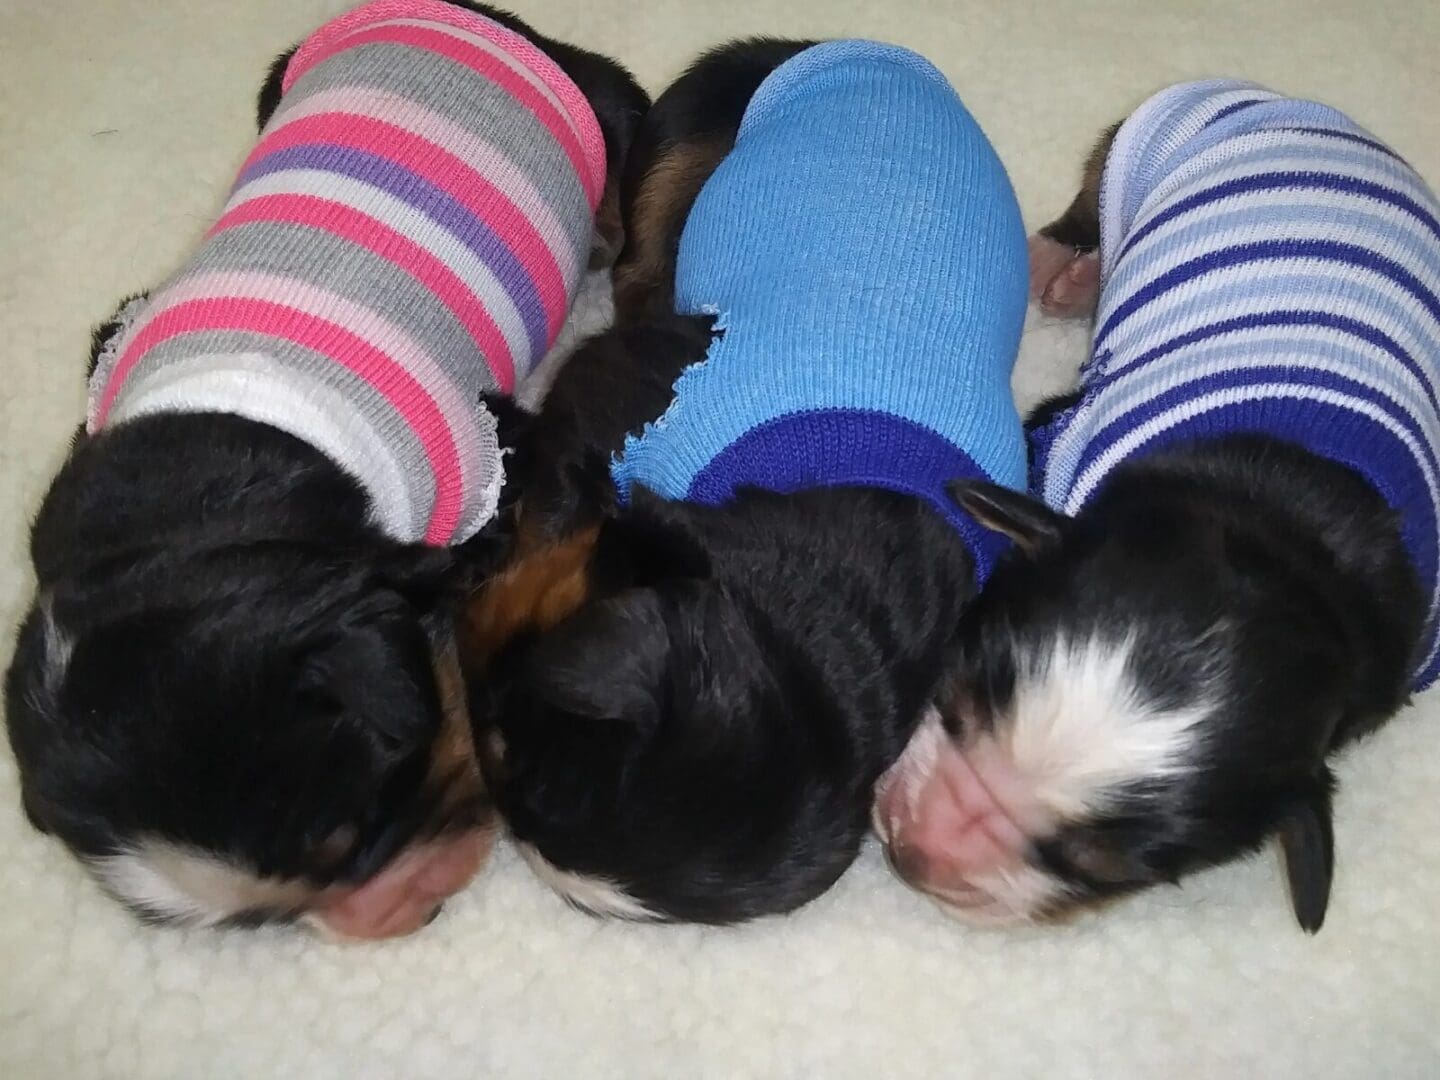 Three puppies are sleeping in their pajamas.